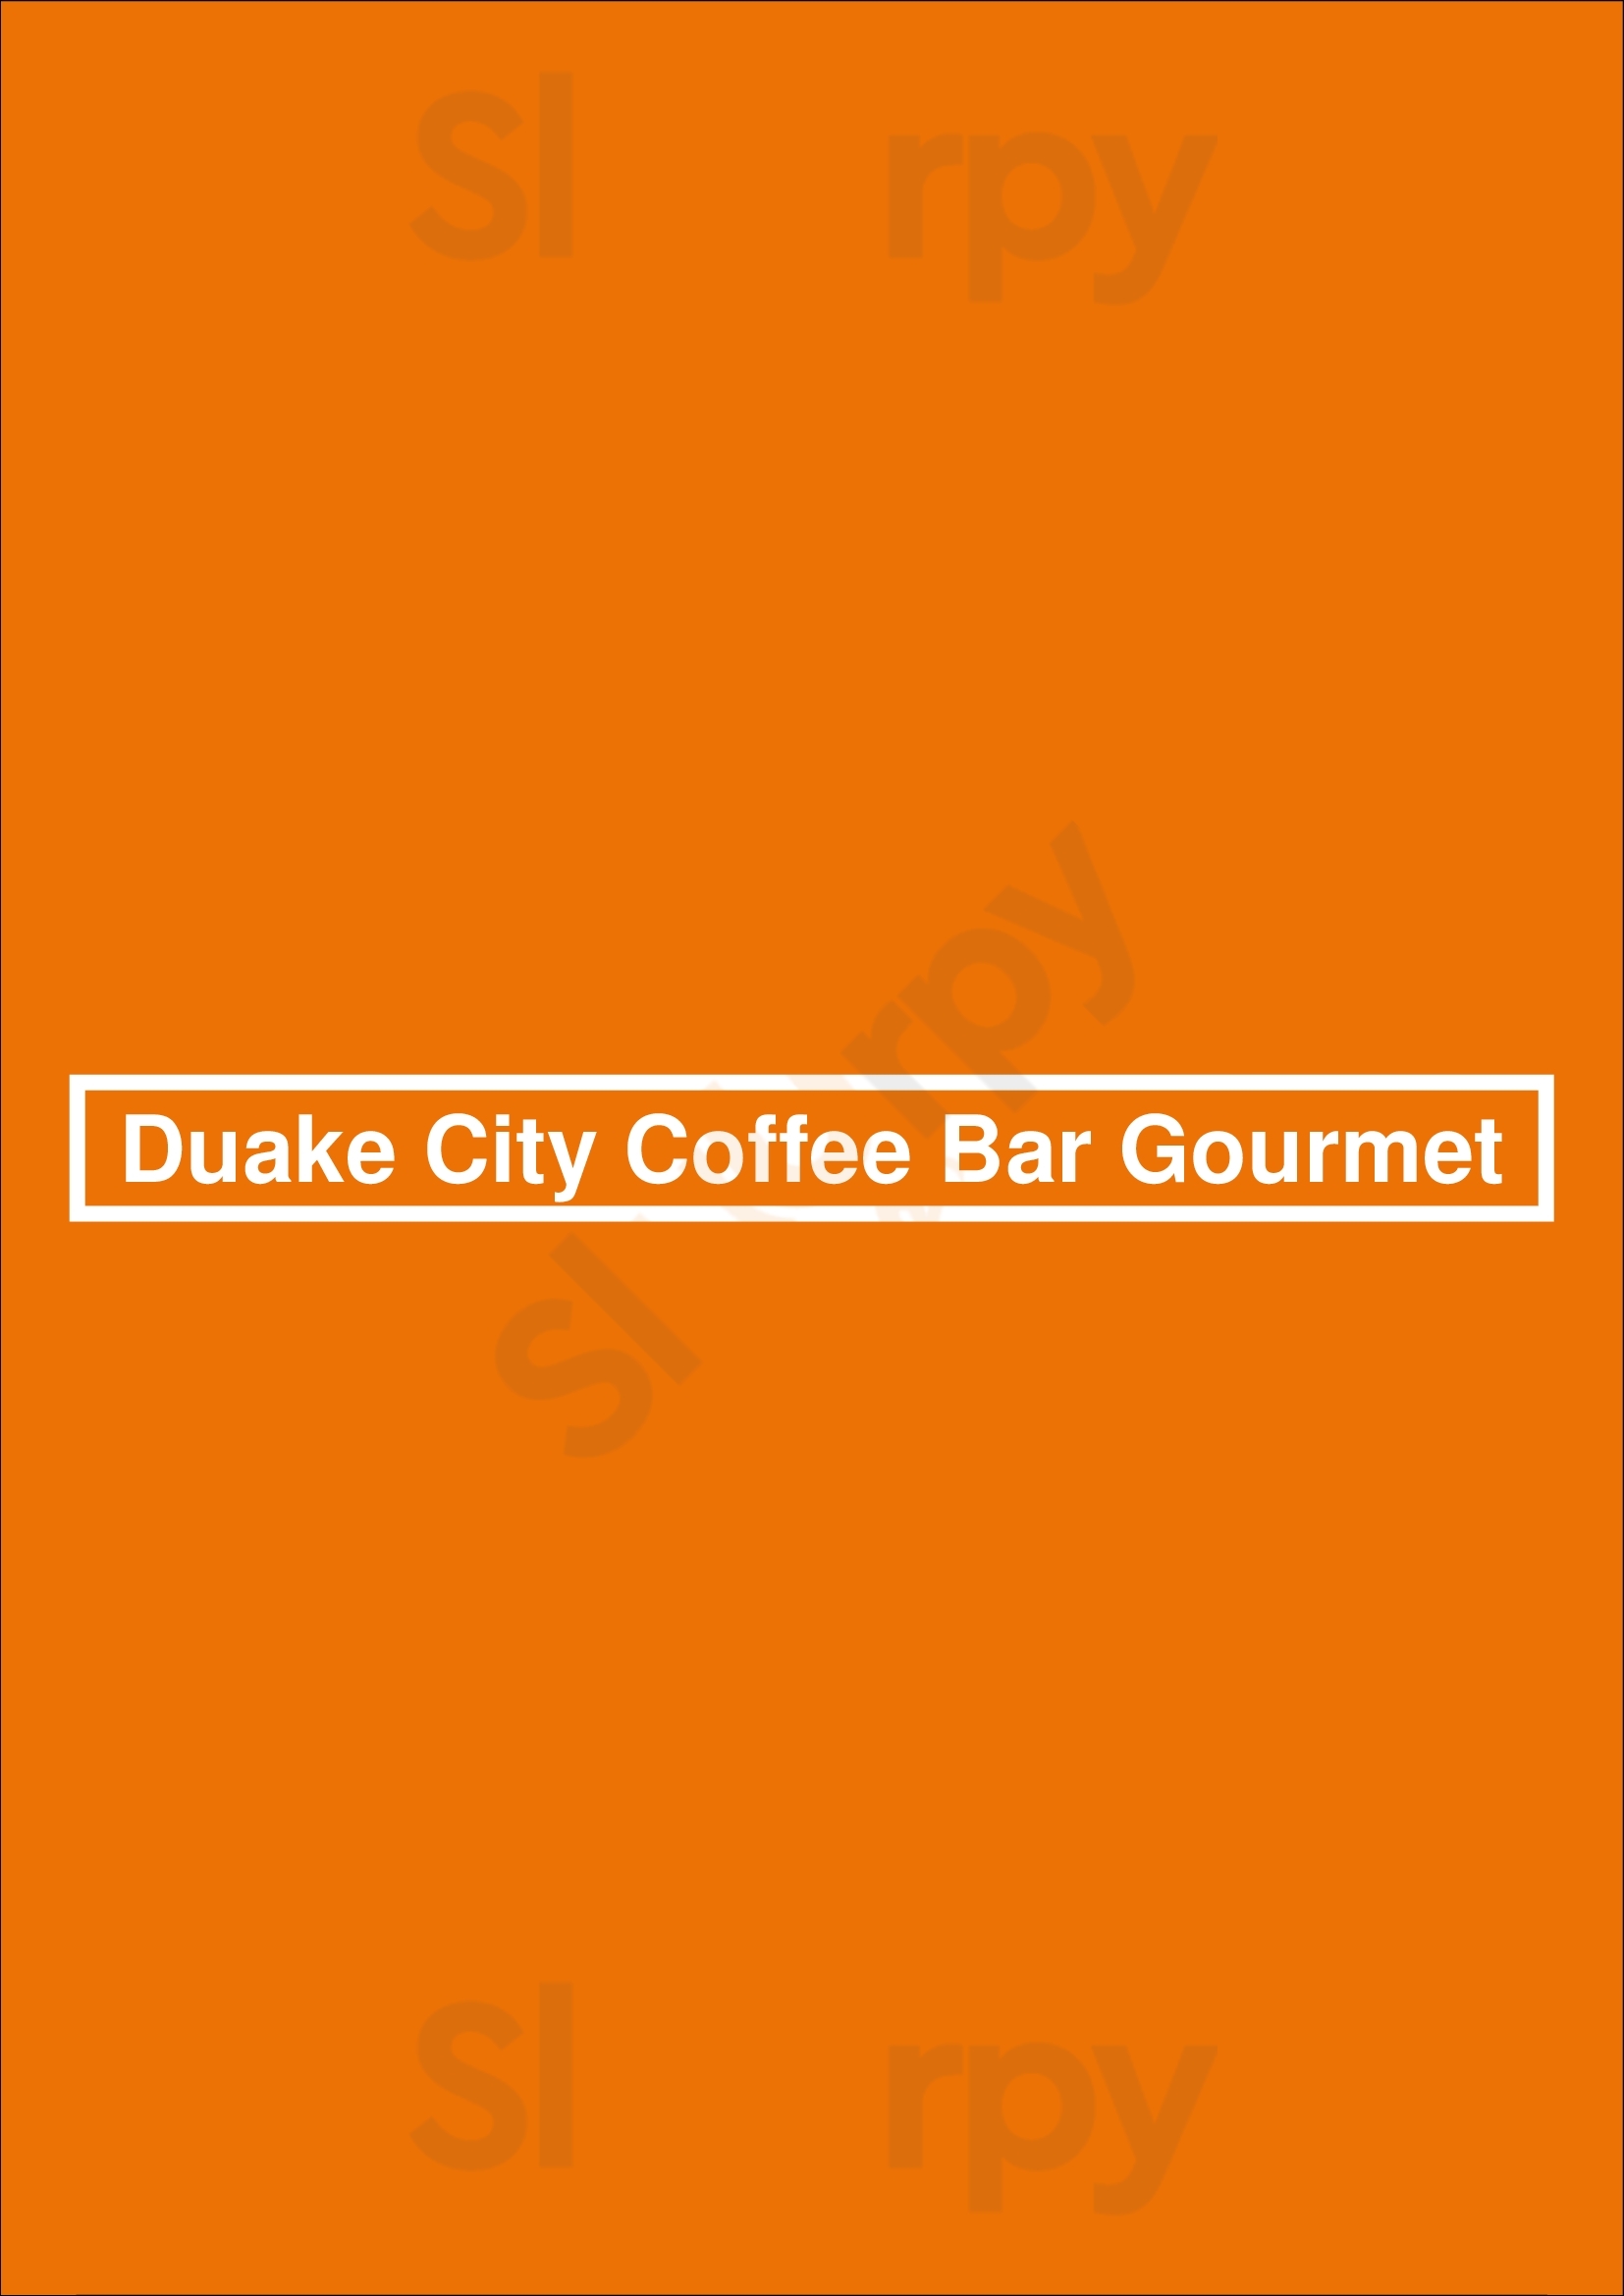 Duake City Coffee Bar Gourmet Navalcarnero Menu - 1